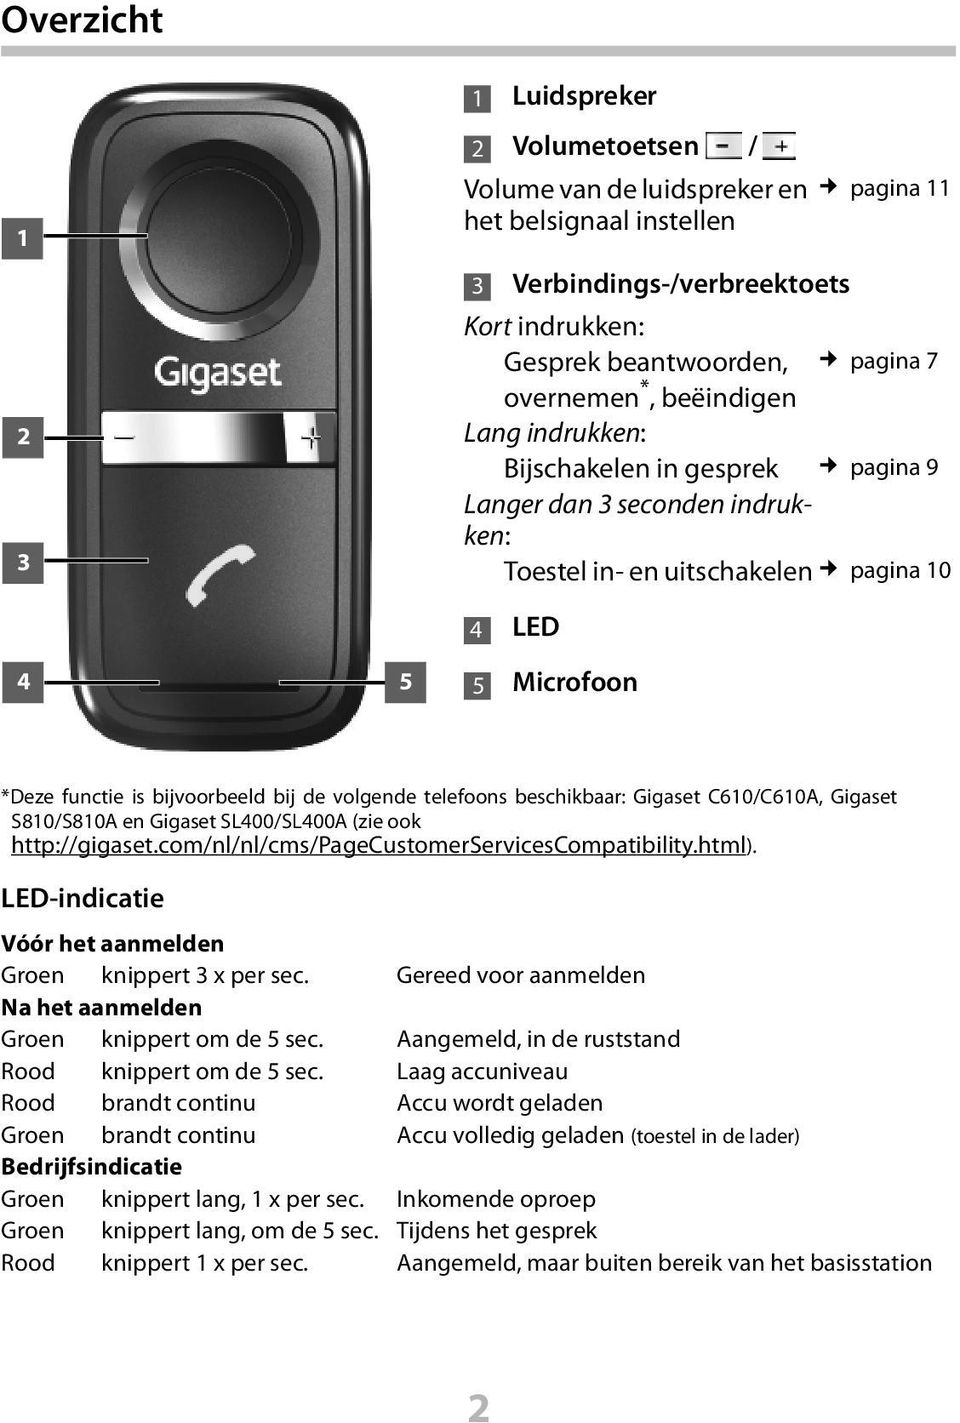 volgende telefoons beschikbaar: Gigaset C610/C610A, Gigaset S810/S810A en Gigaset SL400/SL400A (zie ook http://gigaset.com/nl/nl/cms/pagecustomerservicescompatibility.html).